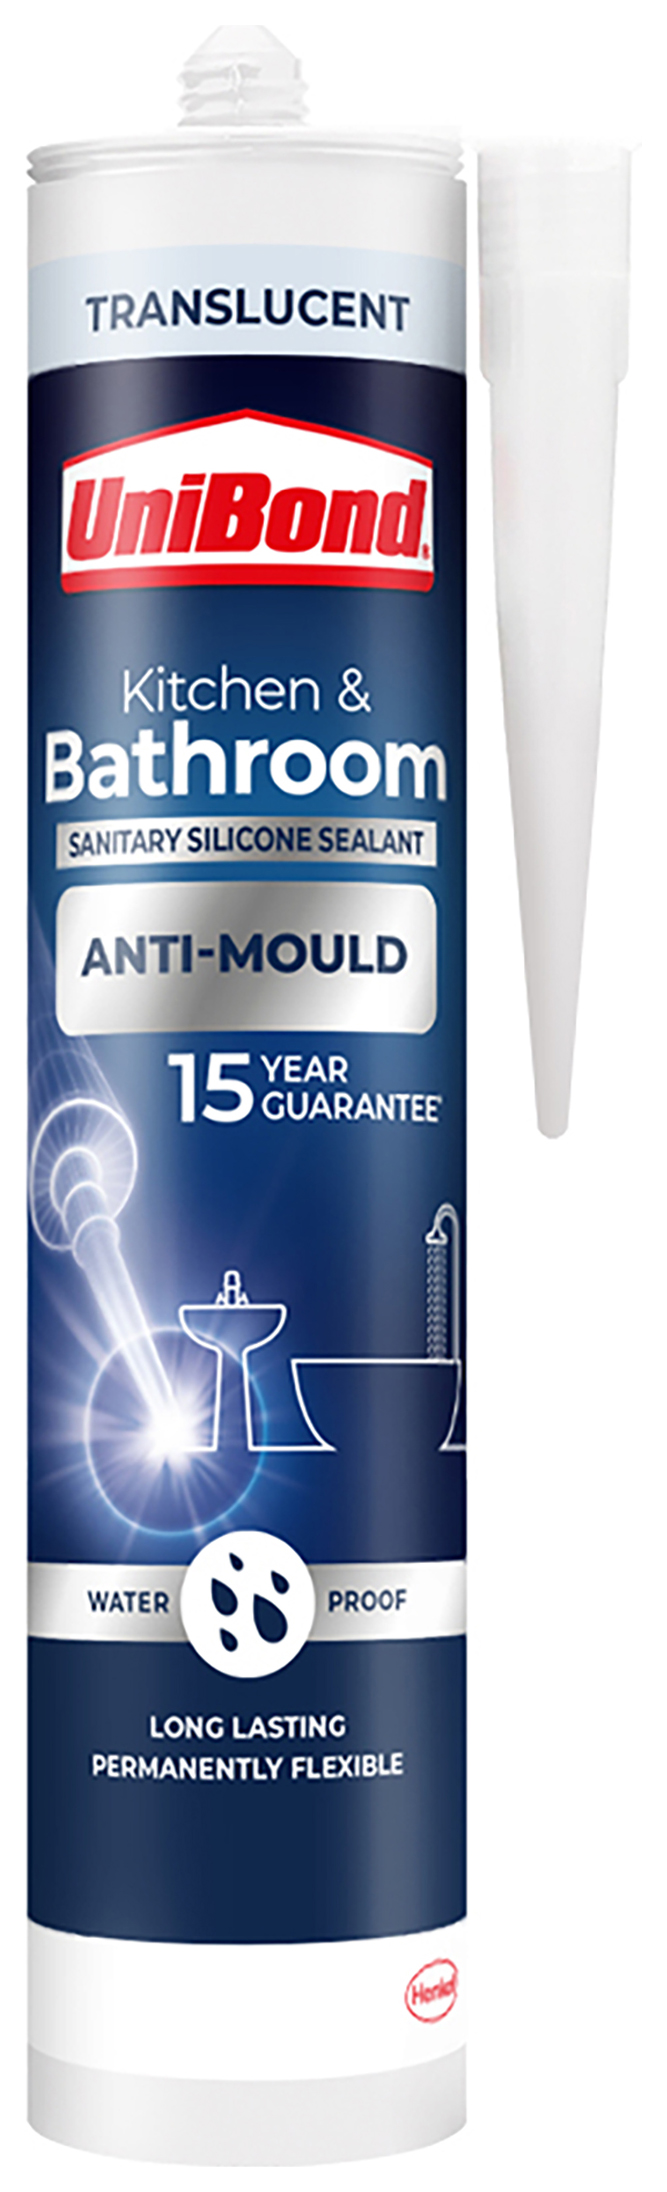 UniBond Anti-Mould Kitchen & Bathroom Translucent Sealant -